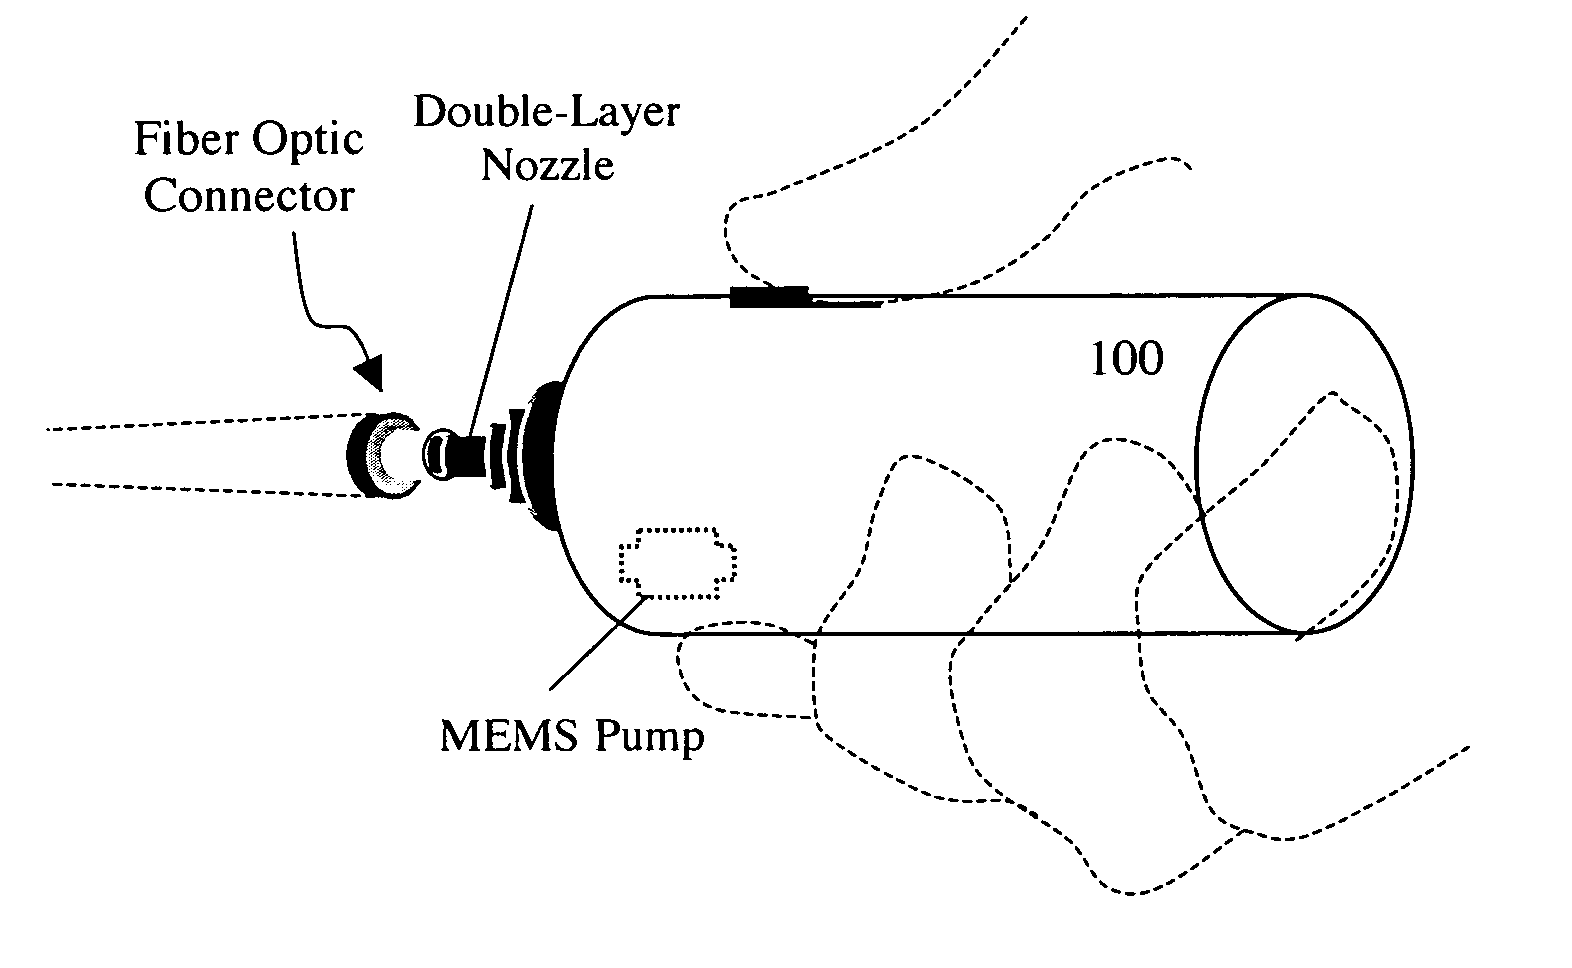 MEMS based handheld fiber optic connector cleaner